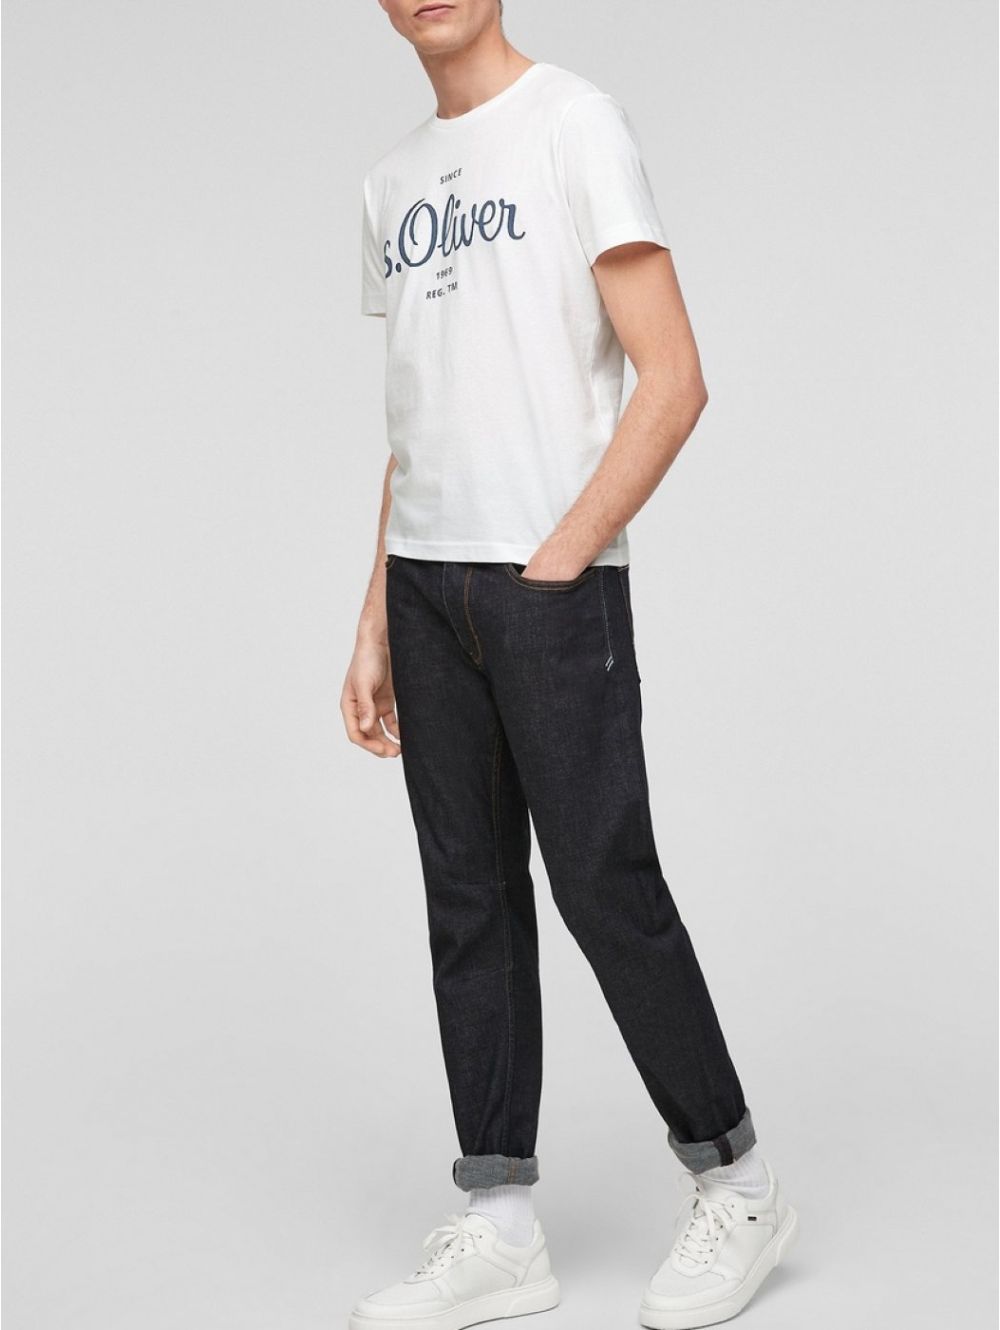 S.OLIVER Men\'s white short-sleeved jersey T-Shirt 2057432-0100 White | T-Shirts